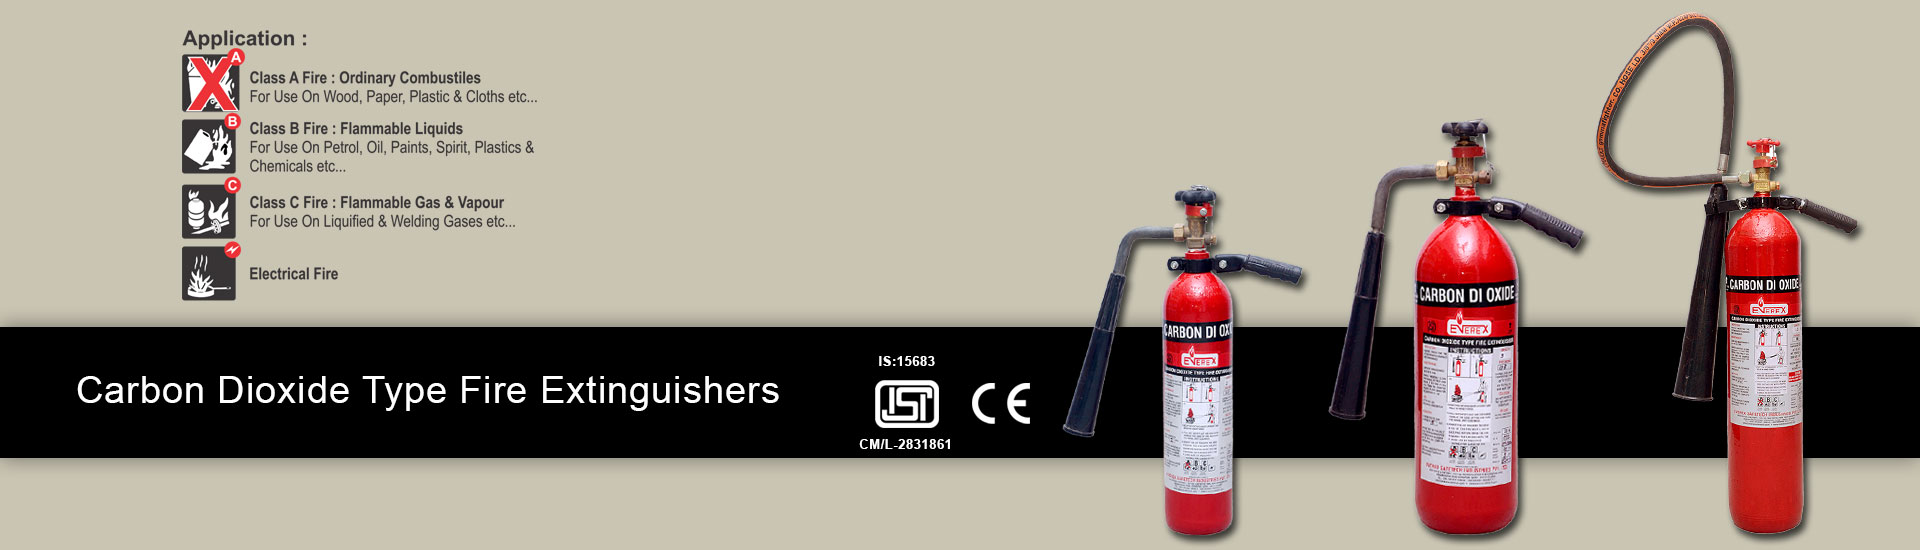 Cardon Dioxide type fire extinguishers